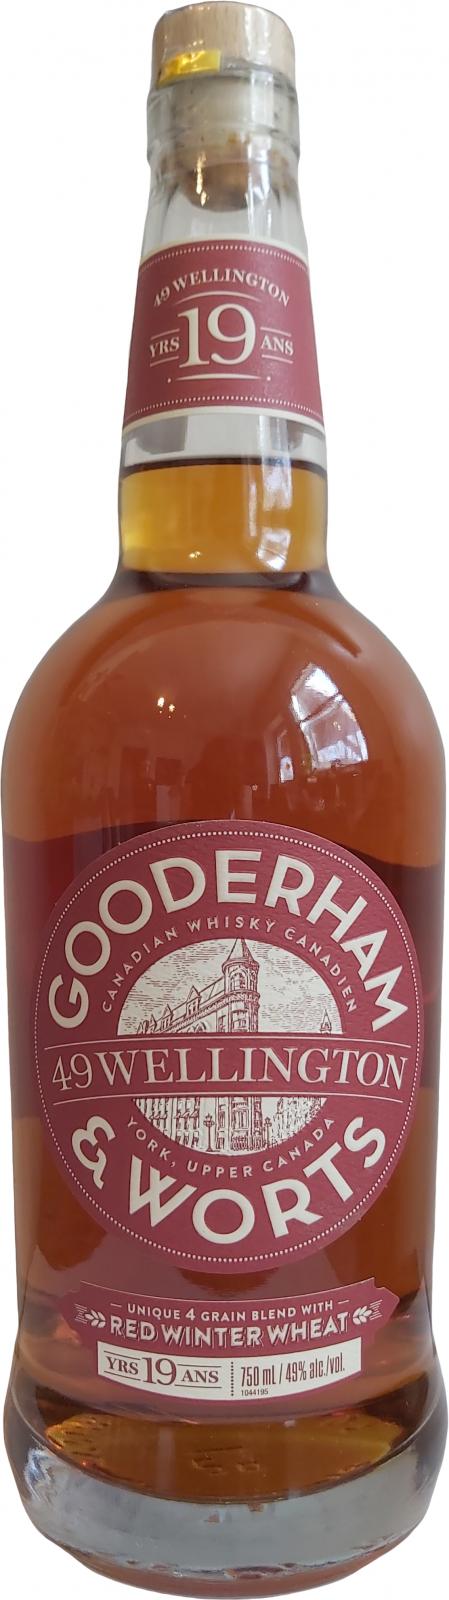 Gooderham & Worts Ltd. 49 Wellington - Red Winter Wheat